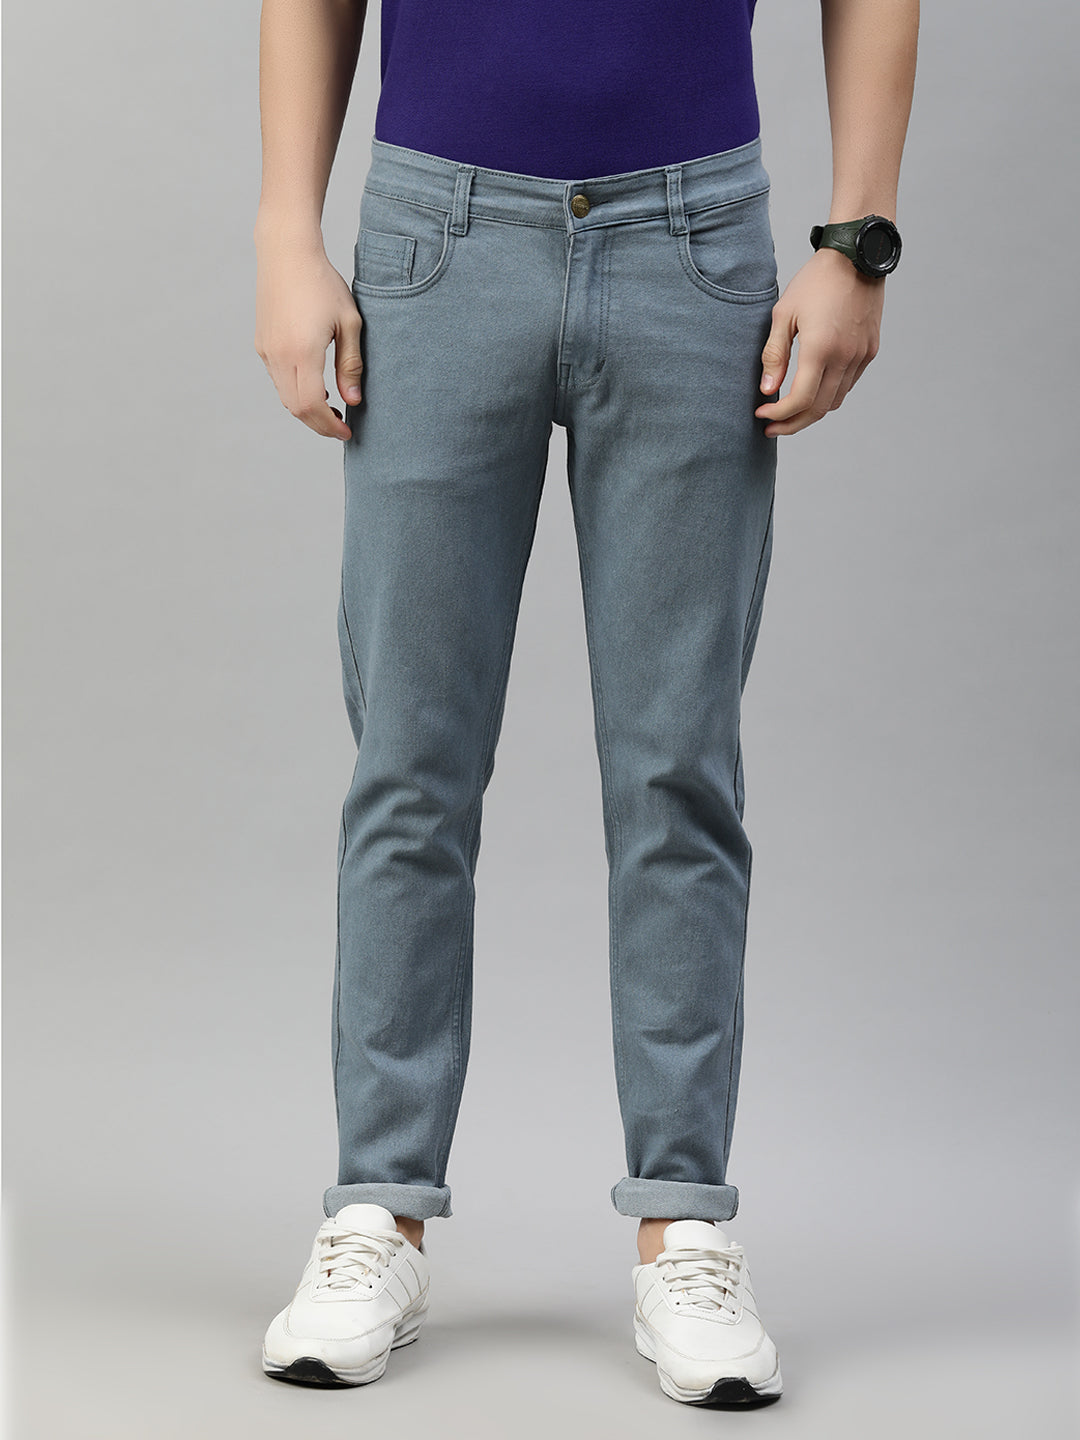 Urbano Fashion Men's Light Grey Slim Fit Denim Jeans Stretchable